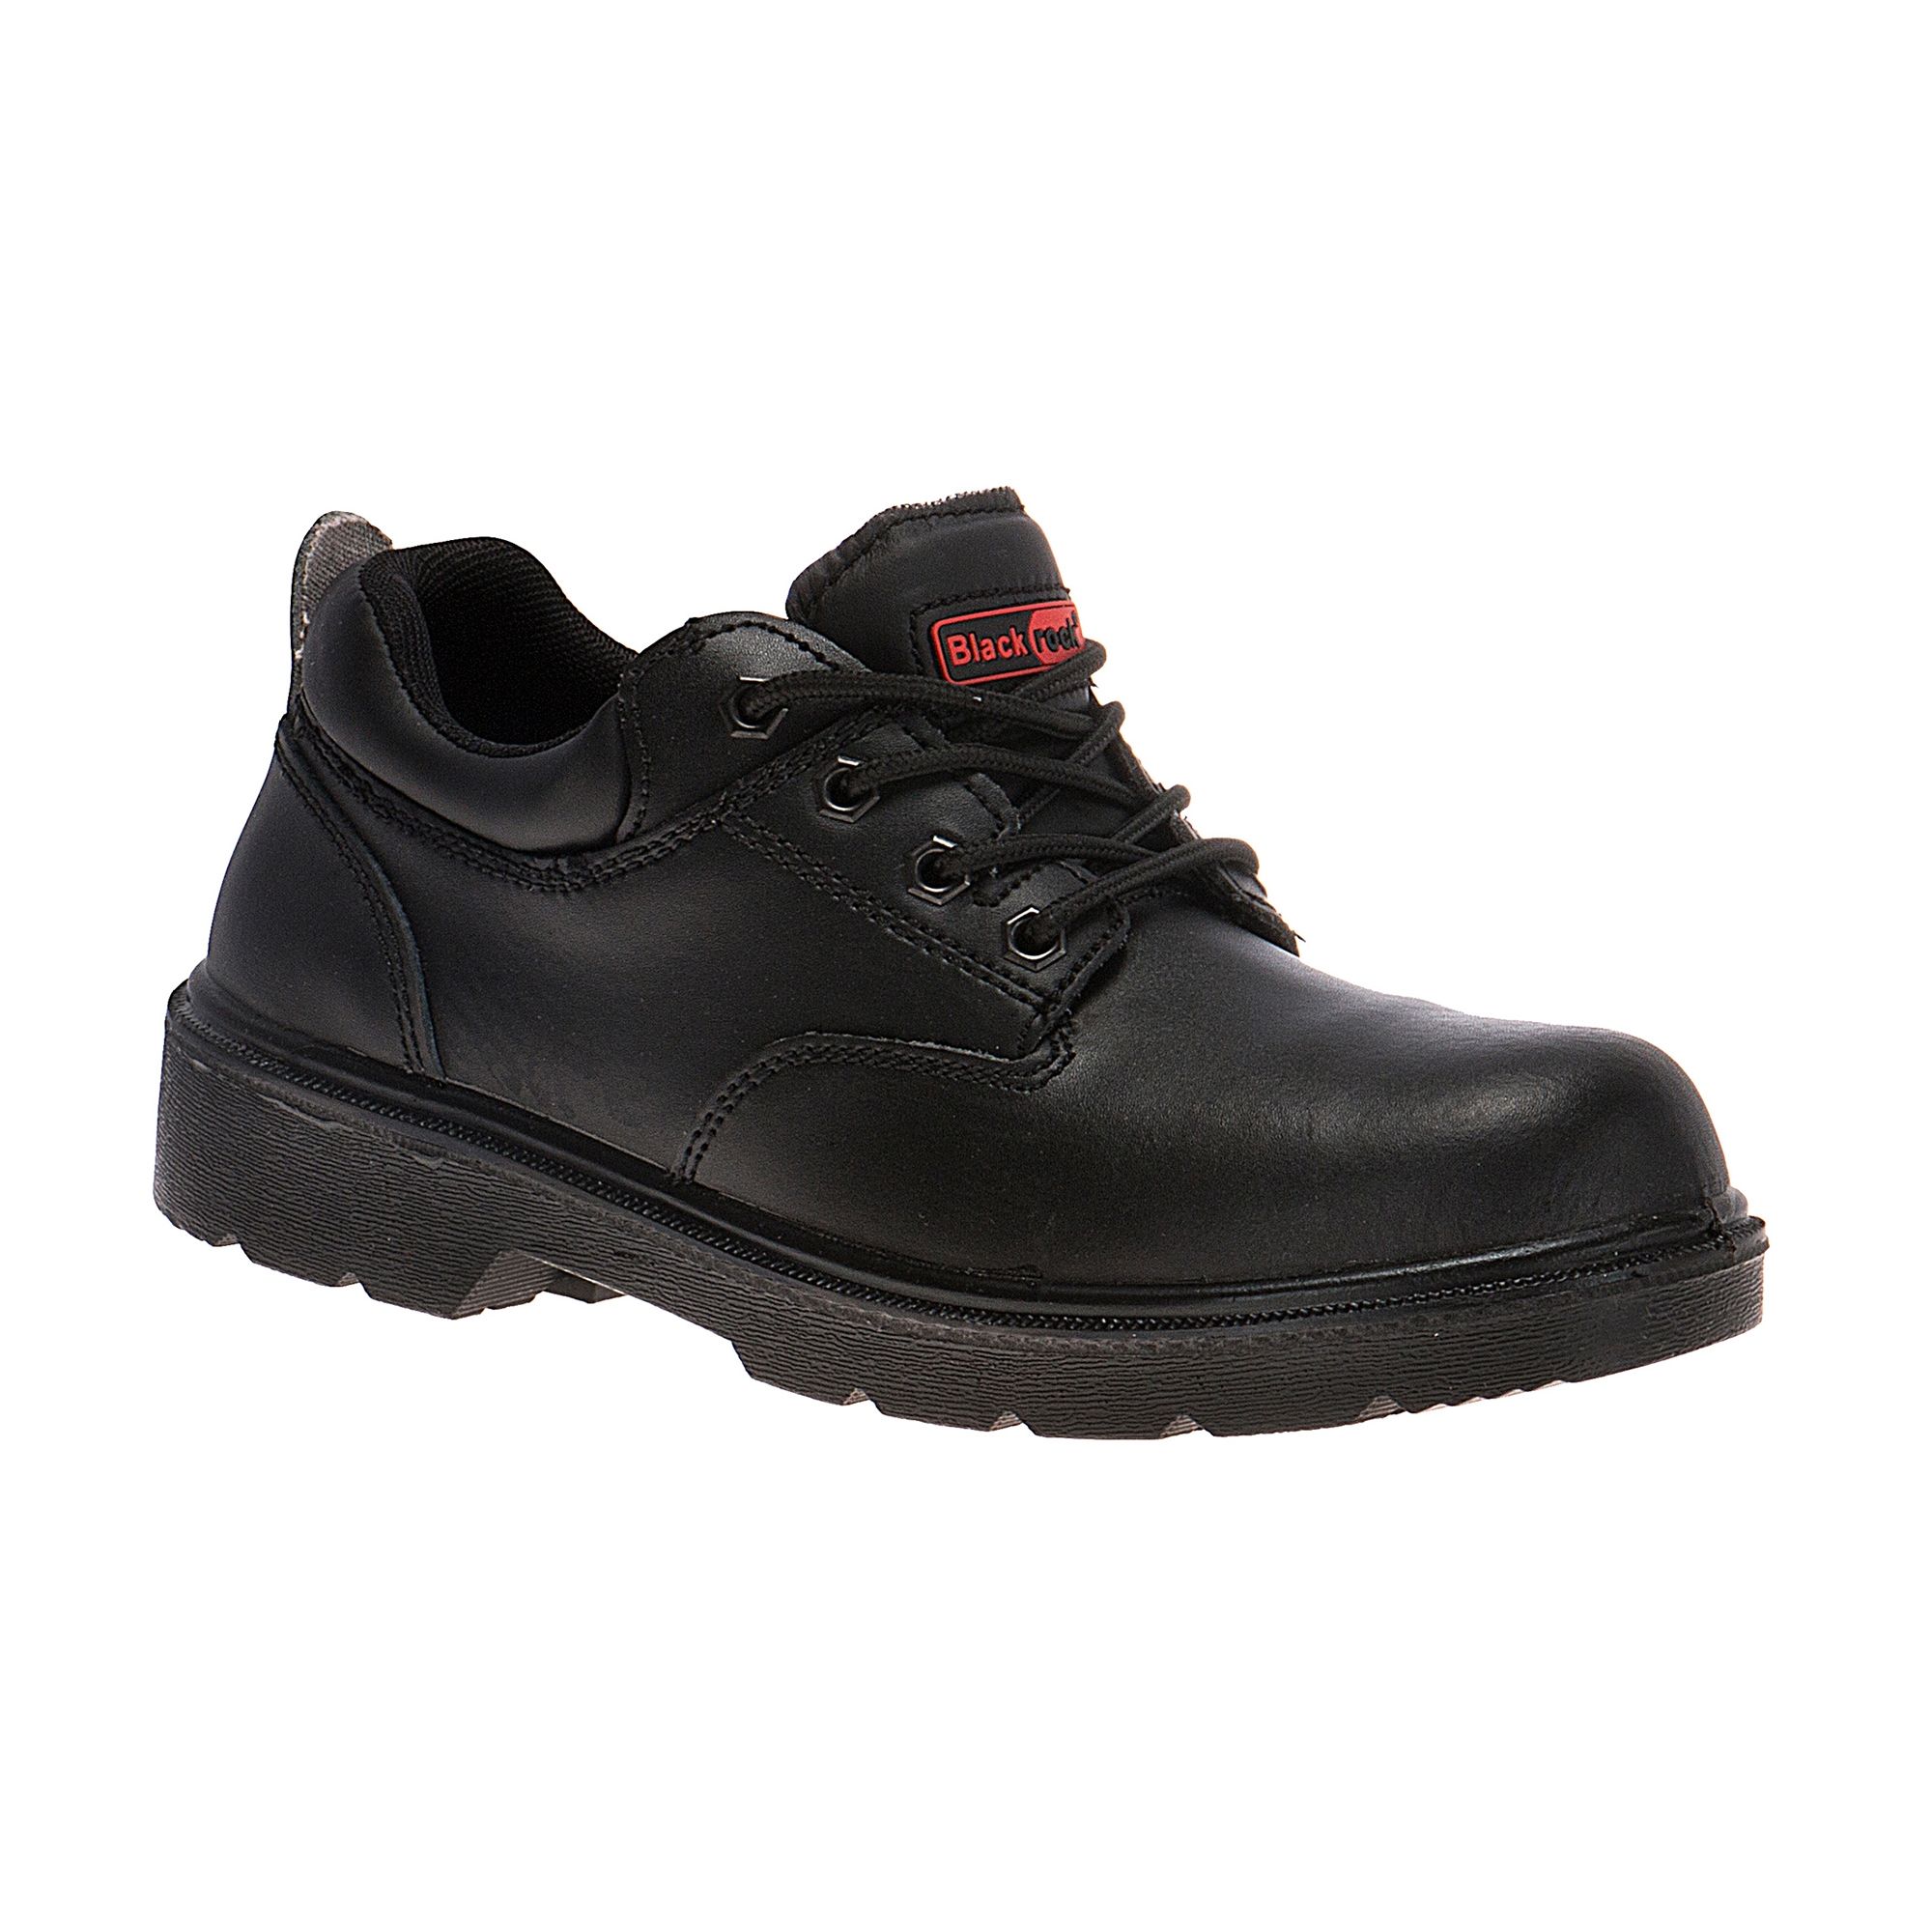 BLACKROCK Hiker Steel Toe Cap Midsole Water Resistant Leather Safety Shoes Size